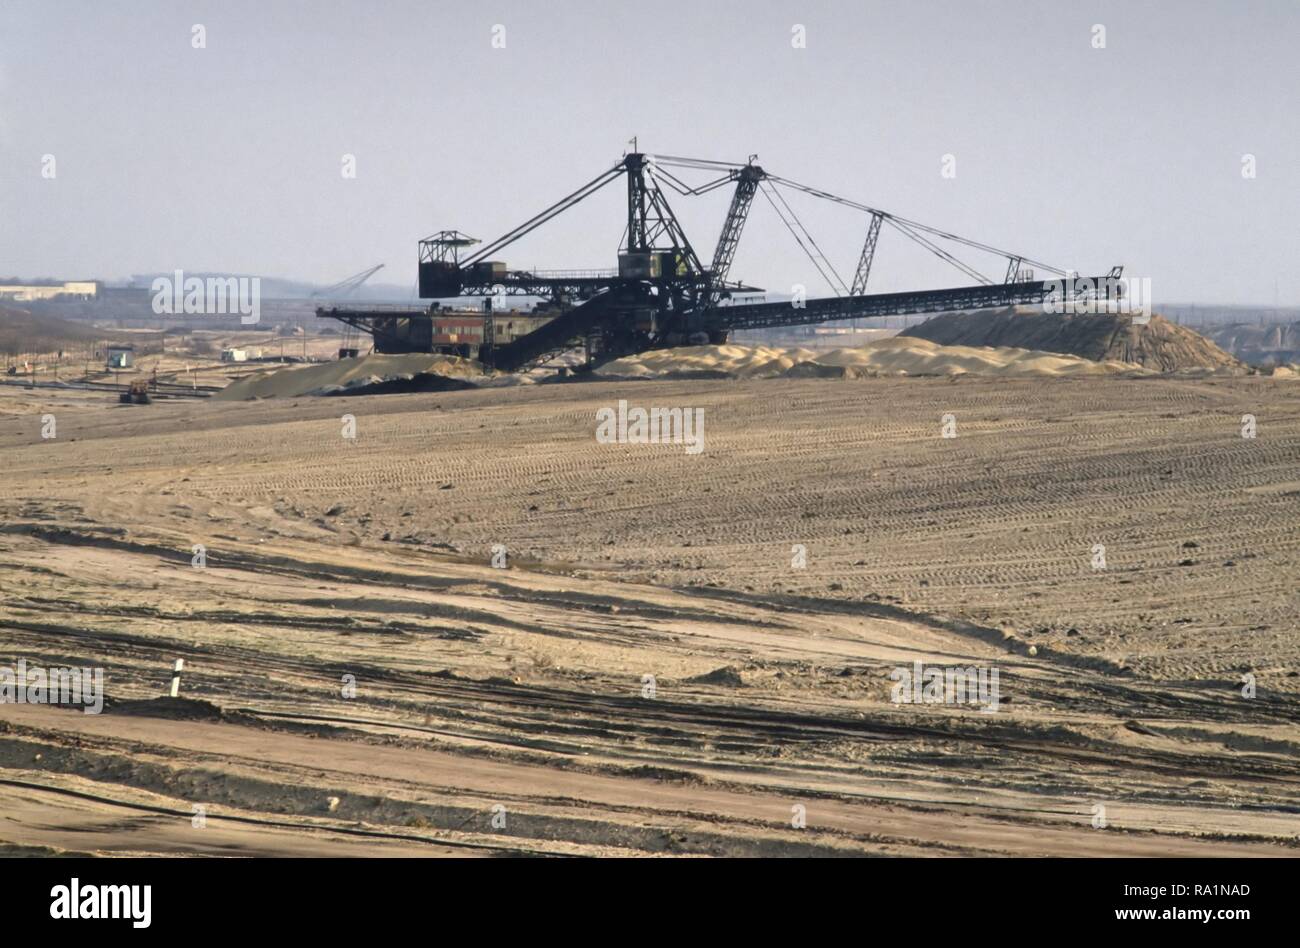 East Germany, open air mine of lignite coal (brown coal) Stock Photo